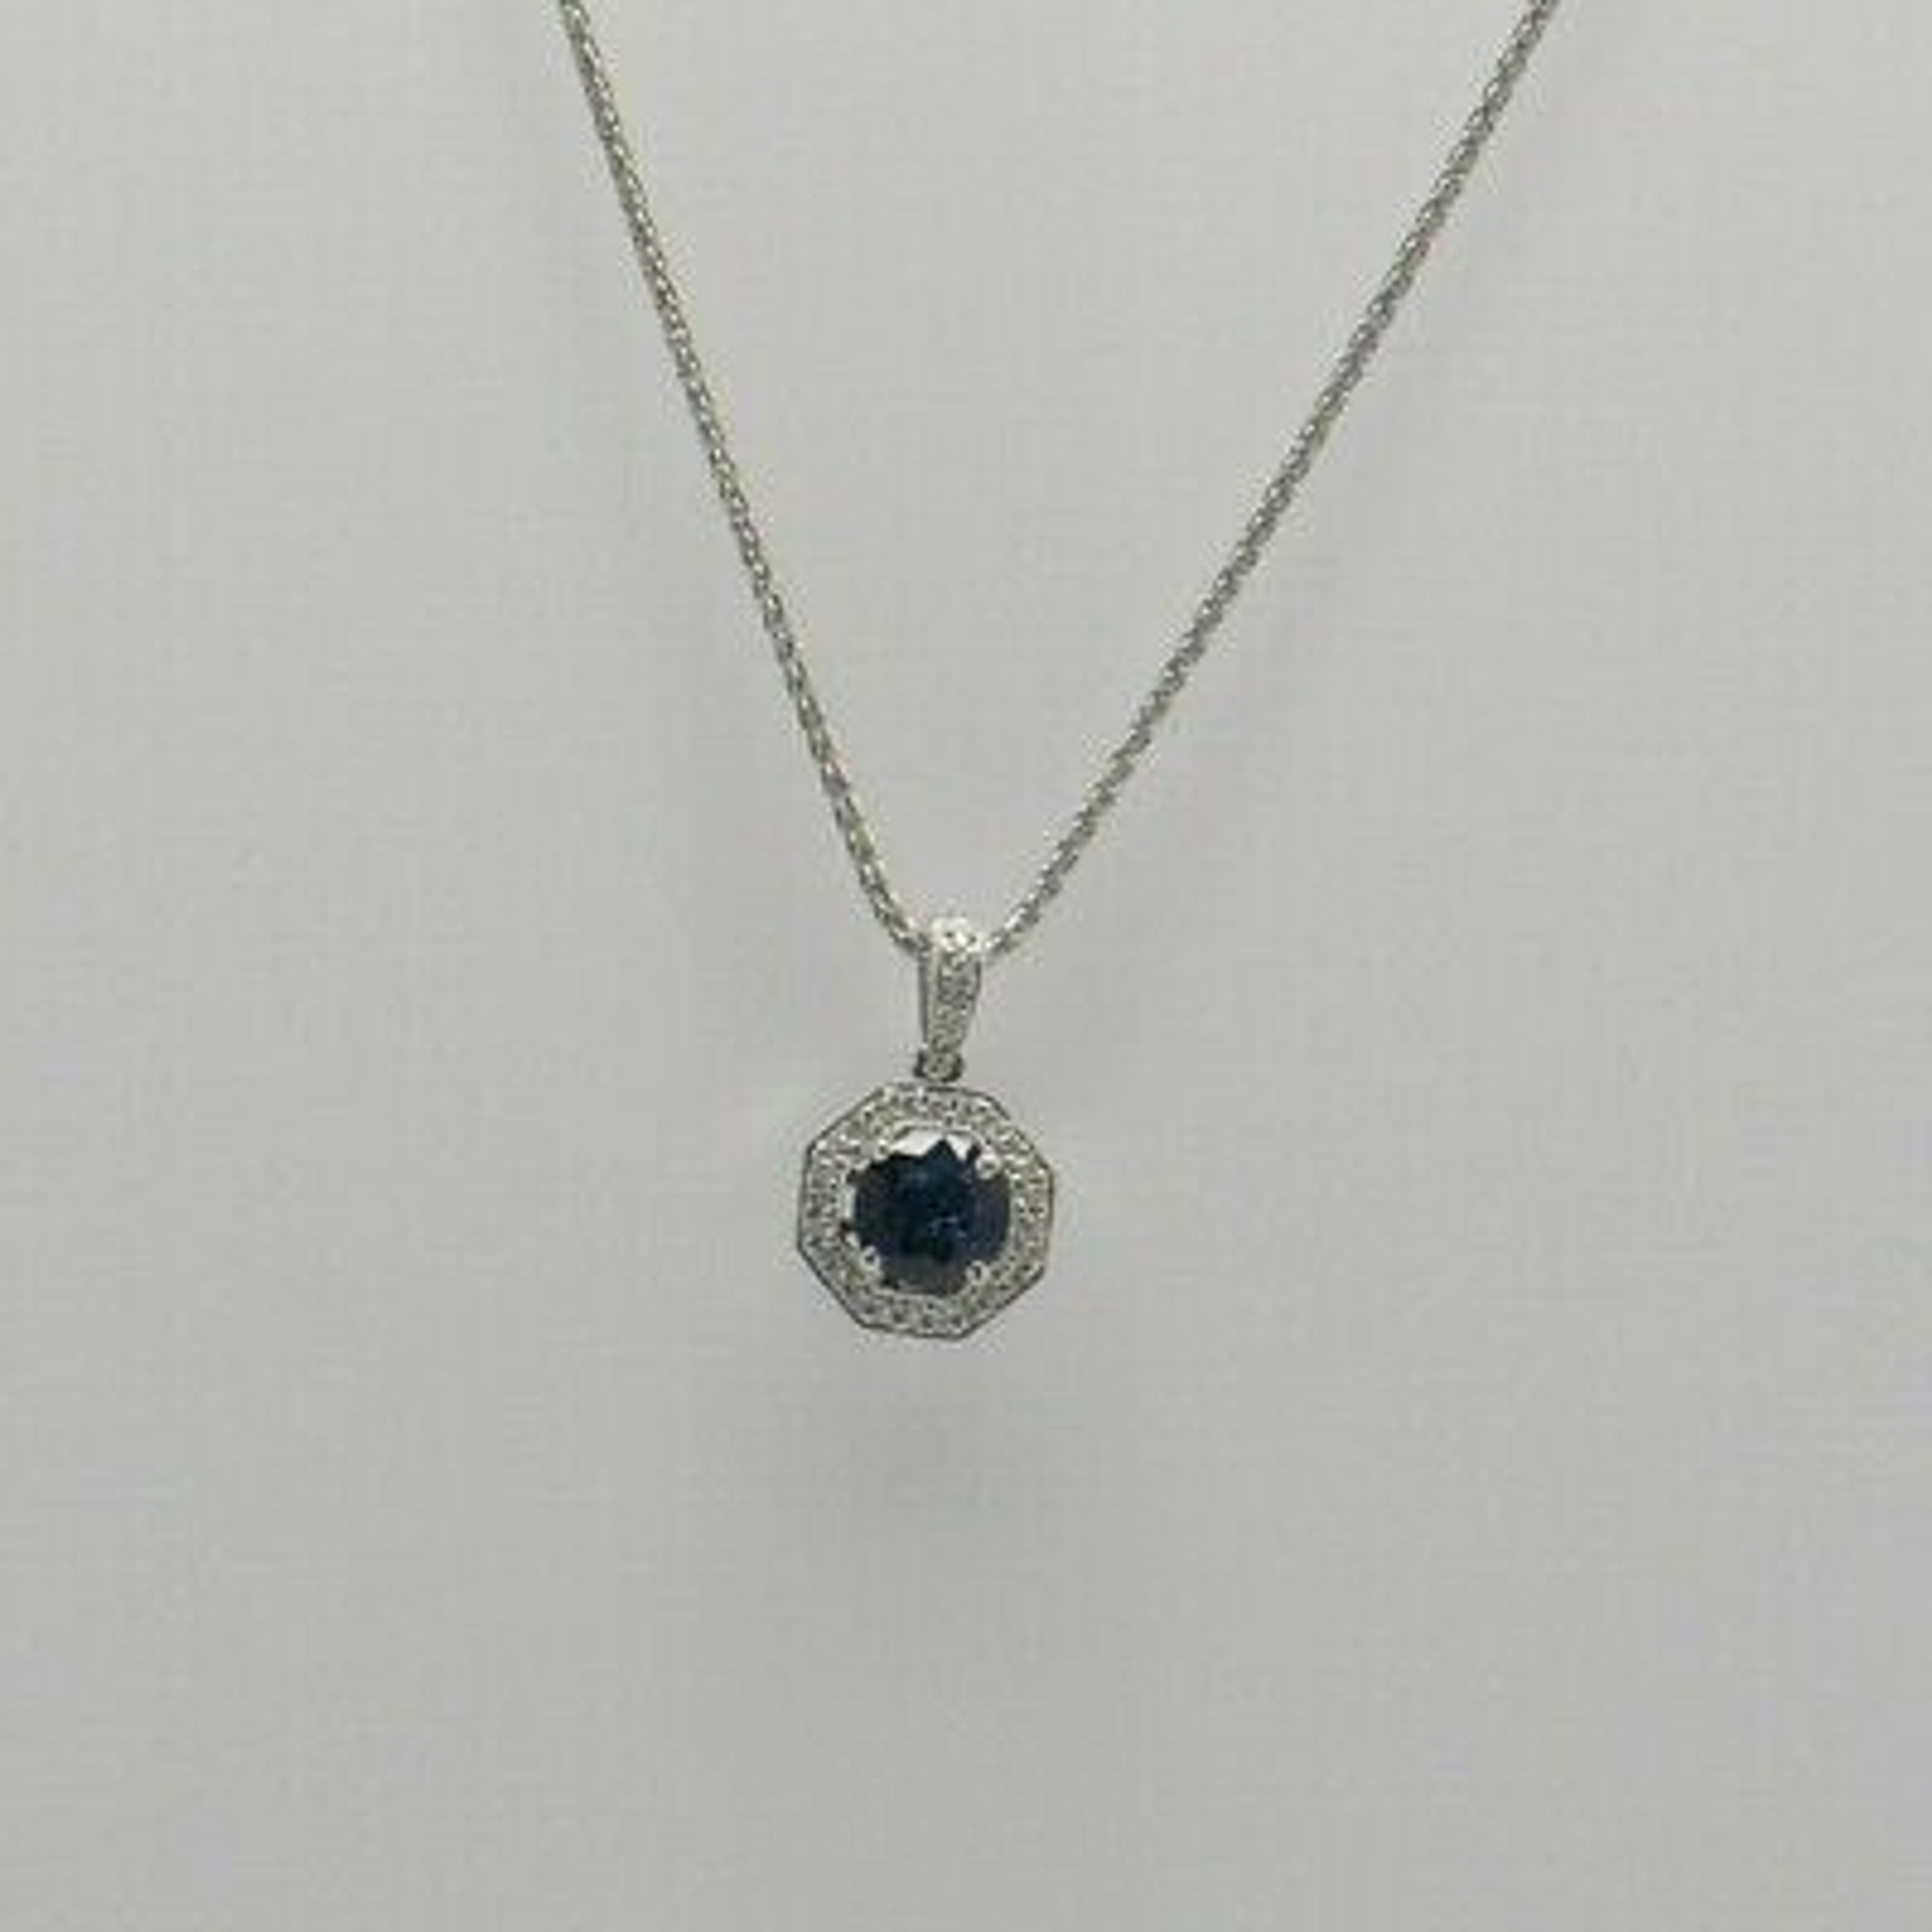 14K WG Blue Sapphire & Diamond Necklace Maker: REKO with 17